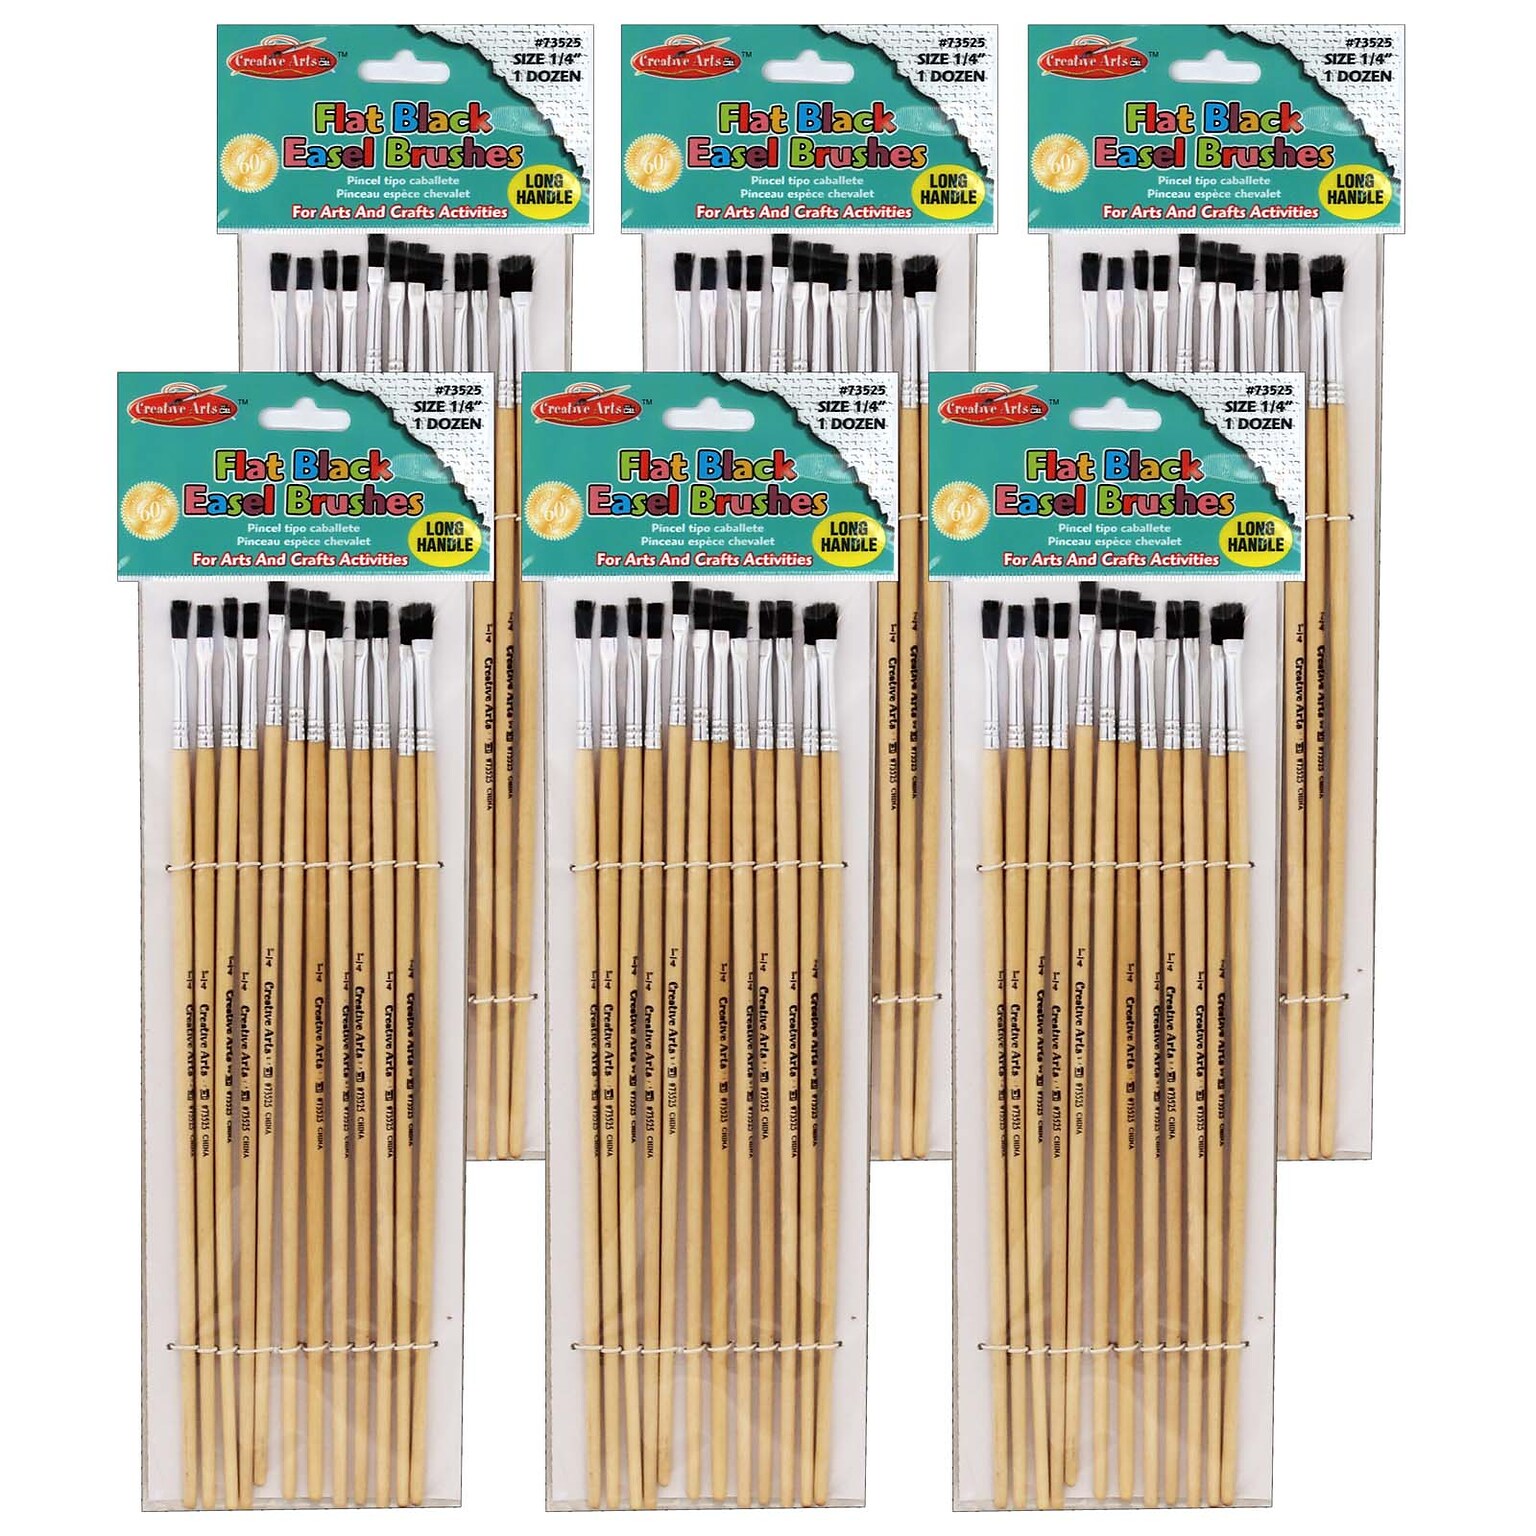 CLI Flat Tip Easel Paint Brushes, 1/4, 12 Per Set, 6 Sets (CHL73525-6)